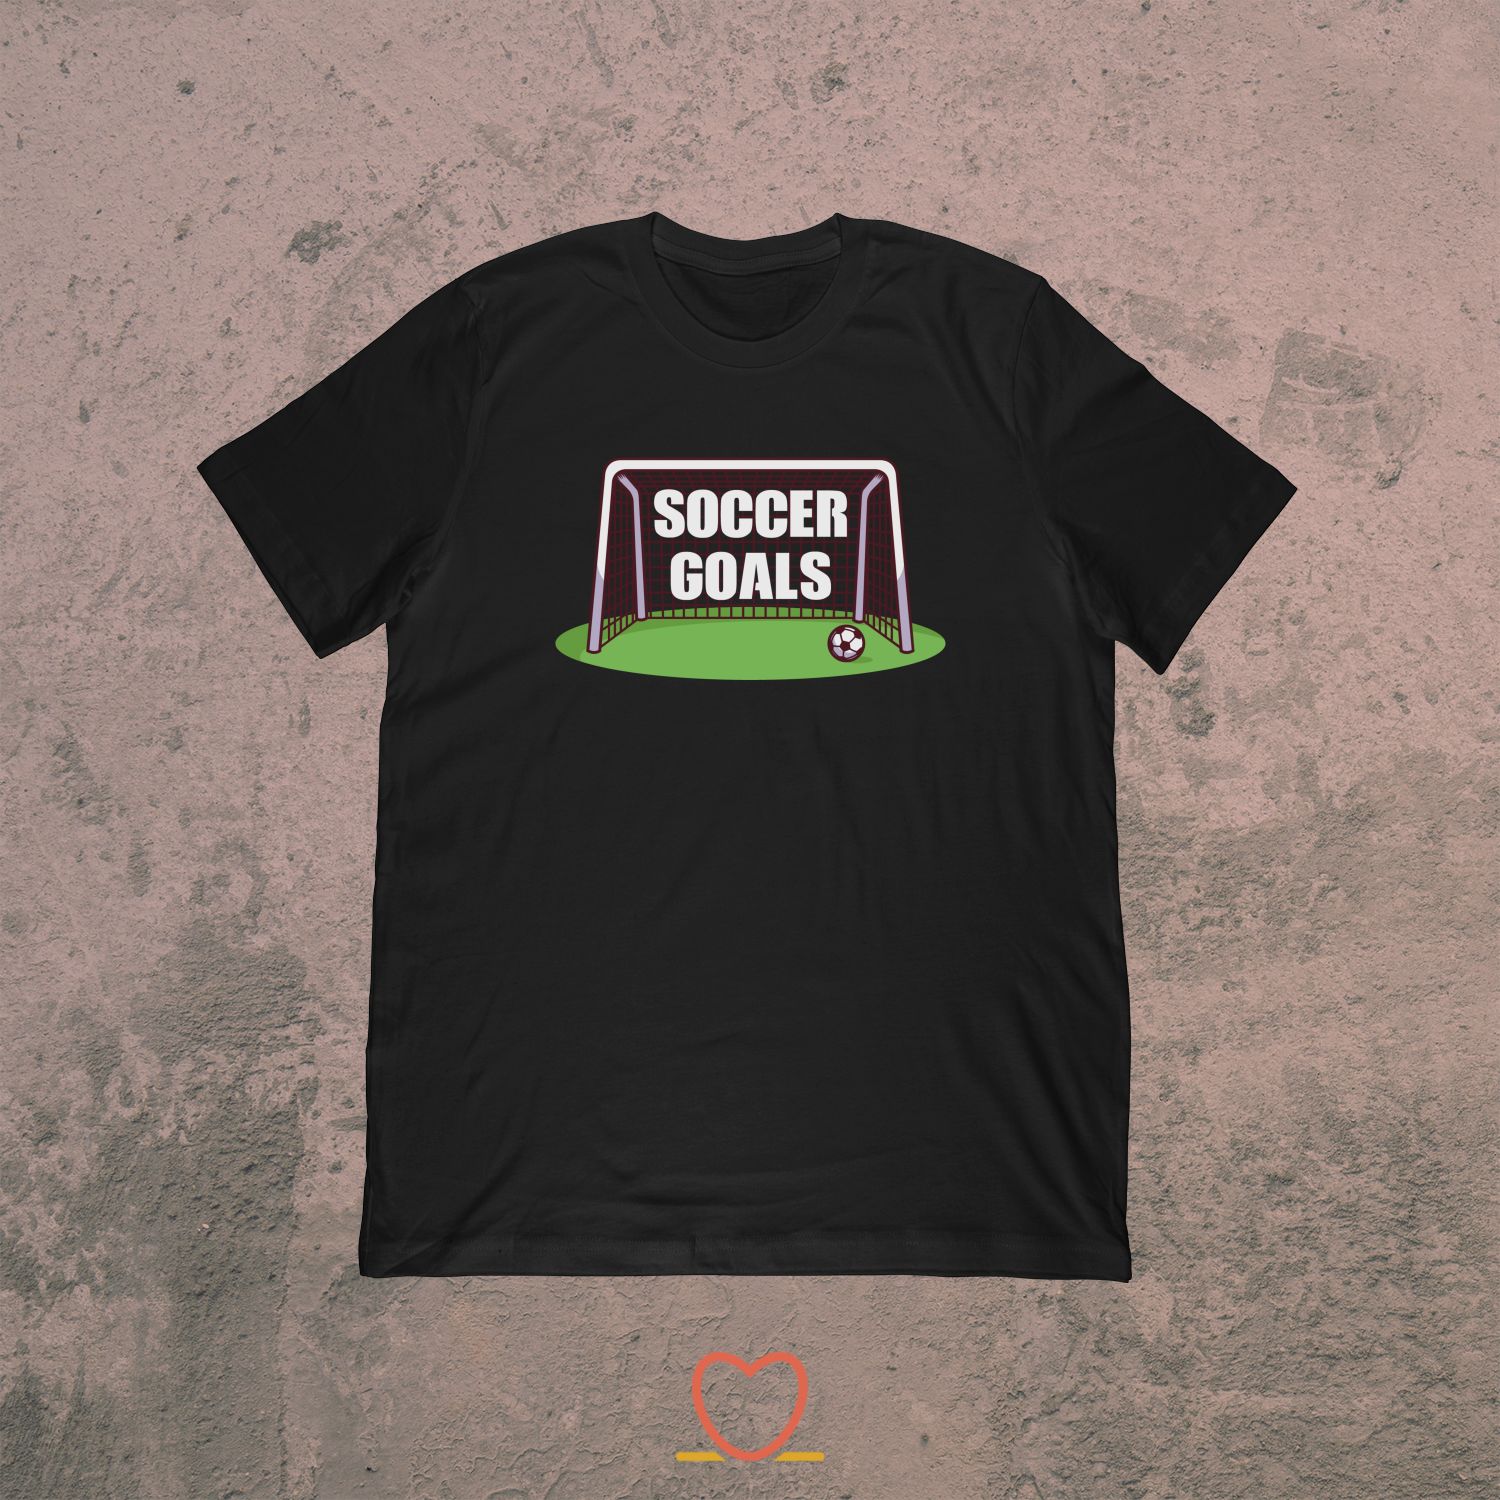 Soccer Goals – Funny Soccer Tee